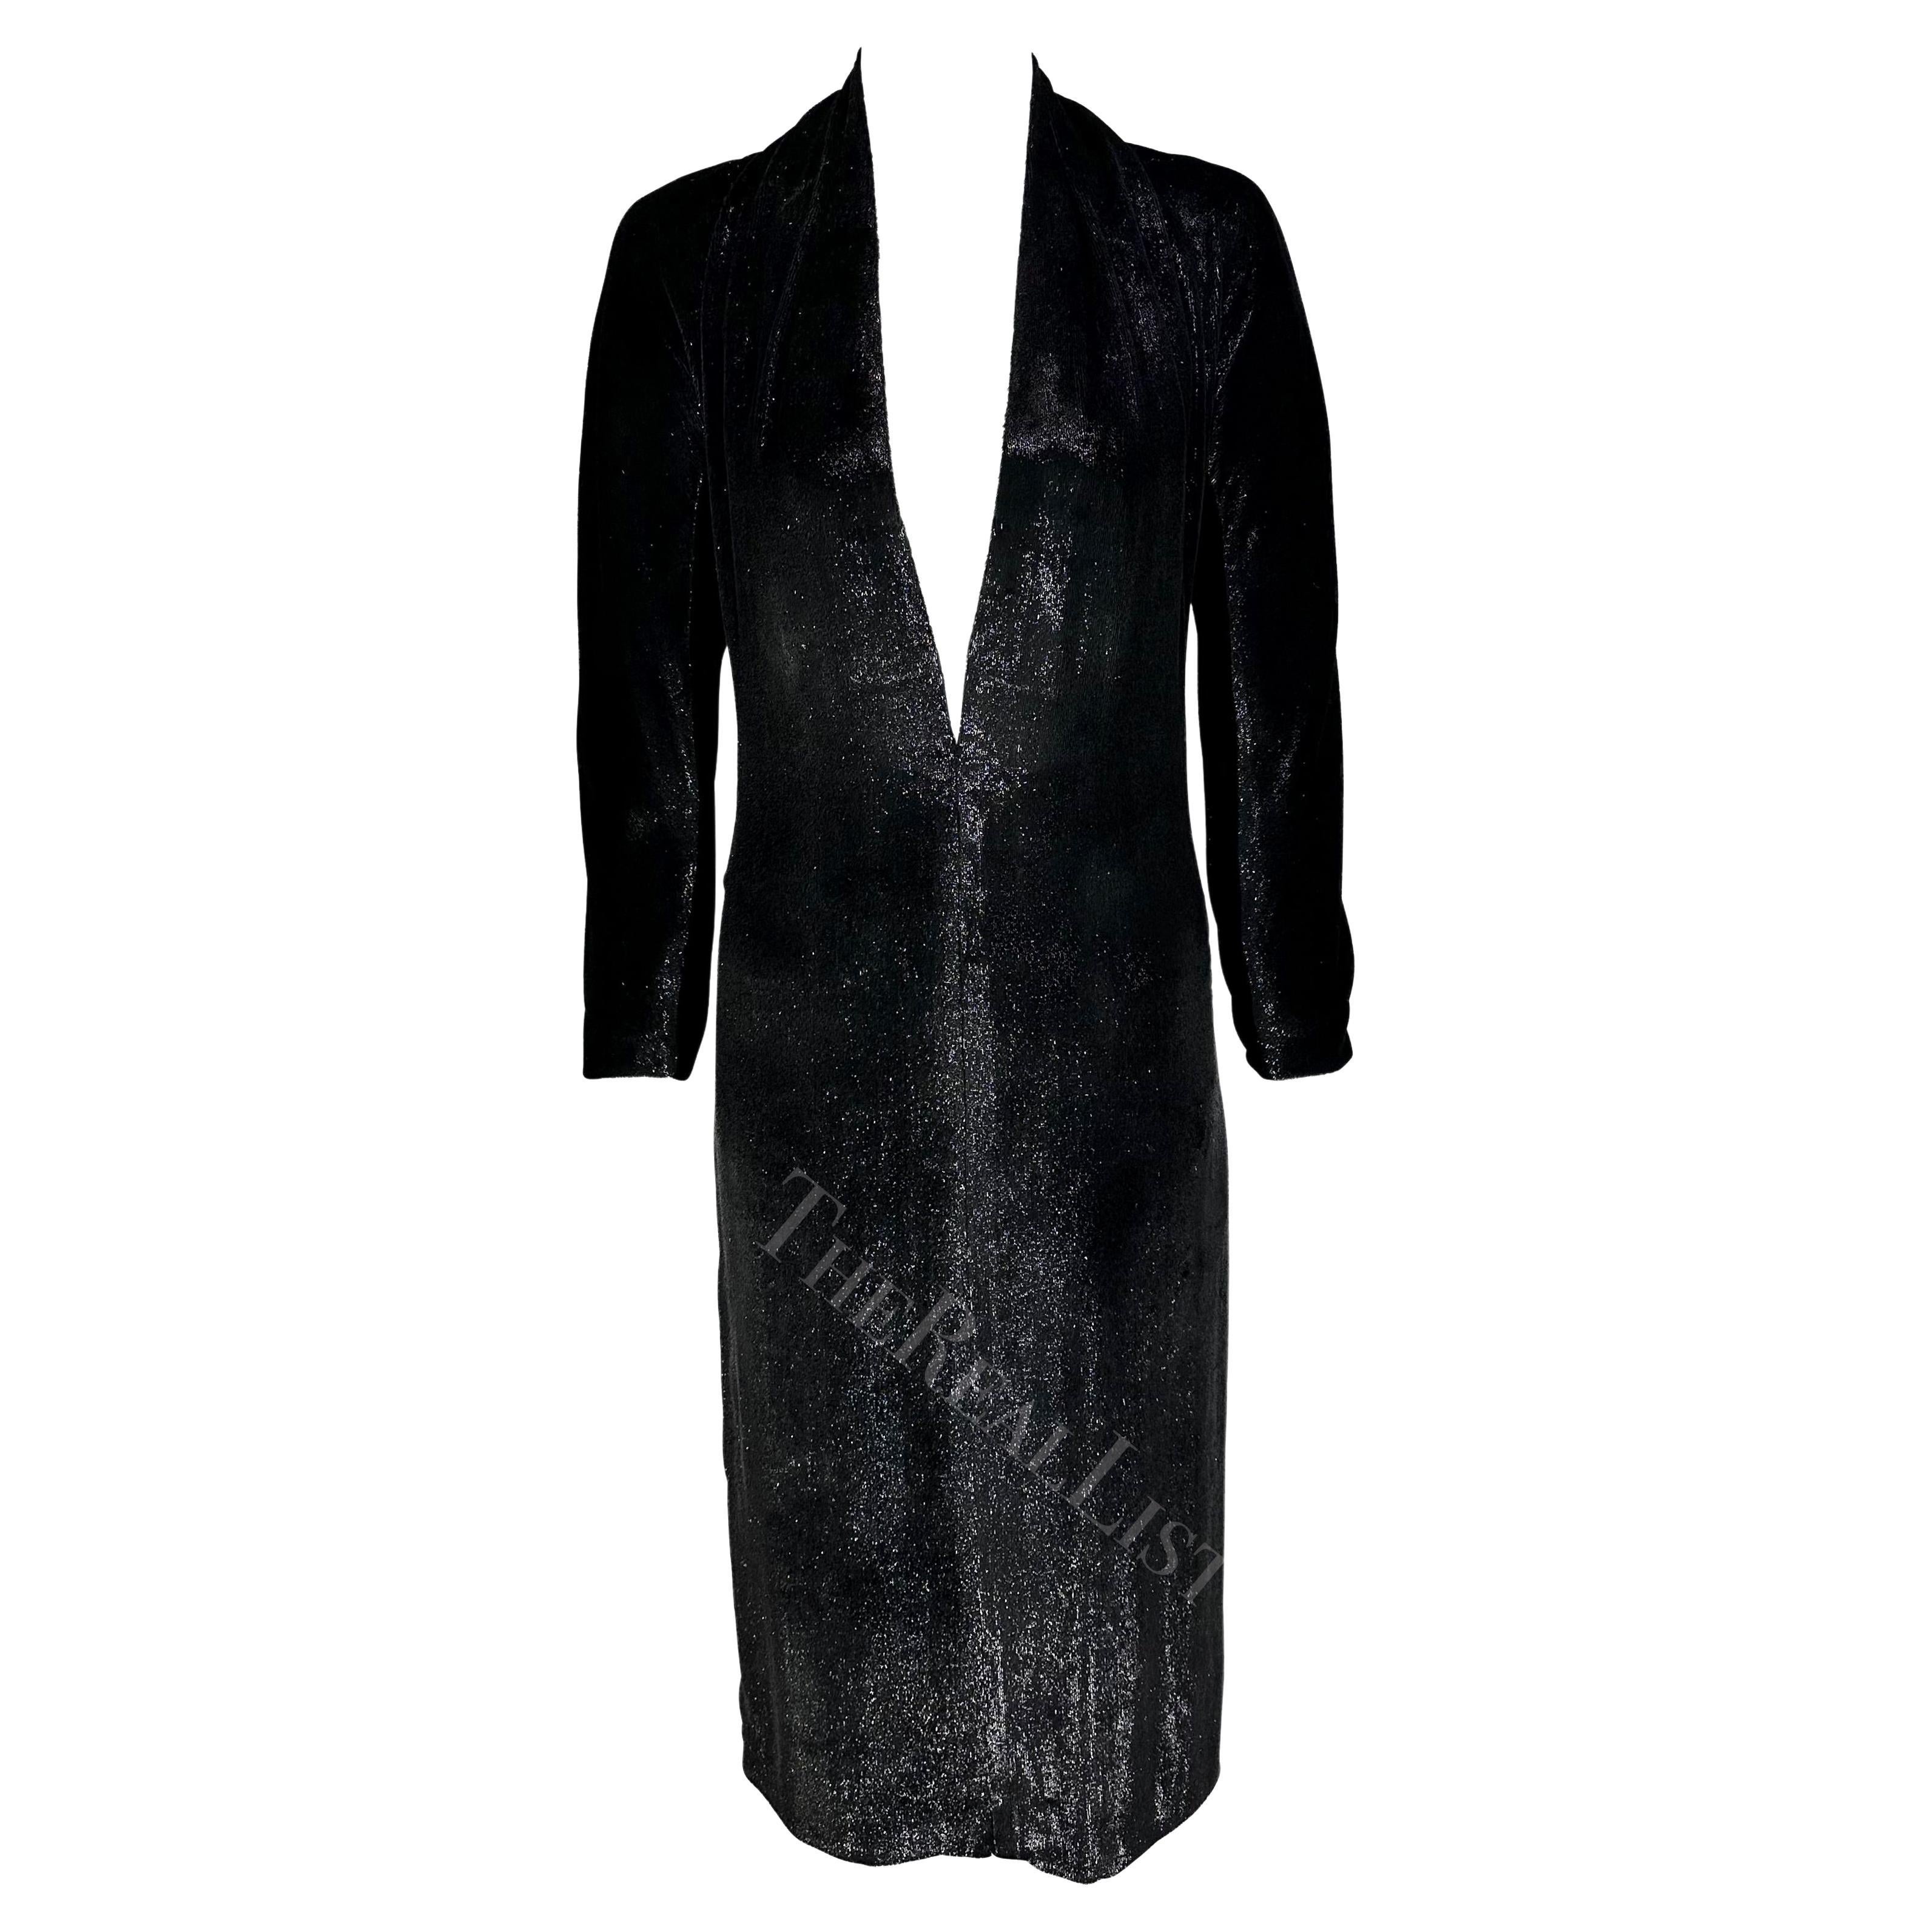 F/W 2000 Yves Saint Laurent by Alber Elbaz Black Sparkle Plunging Runway Dress For Sale